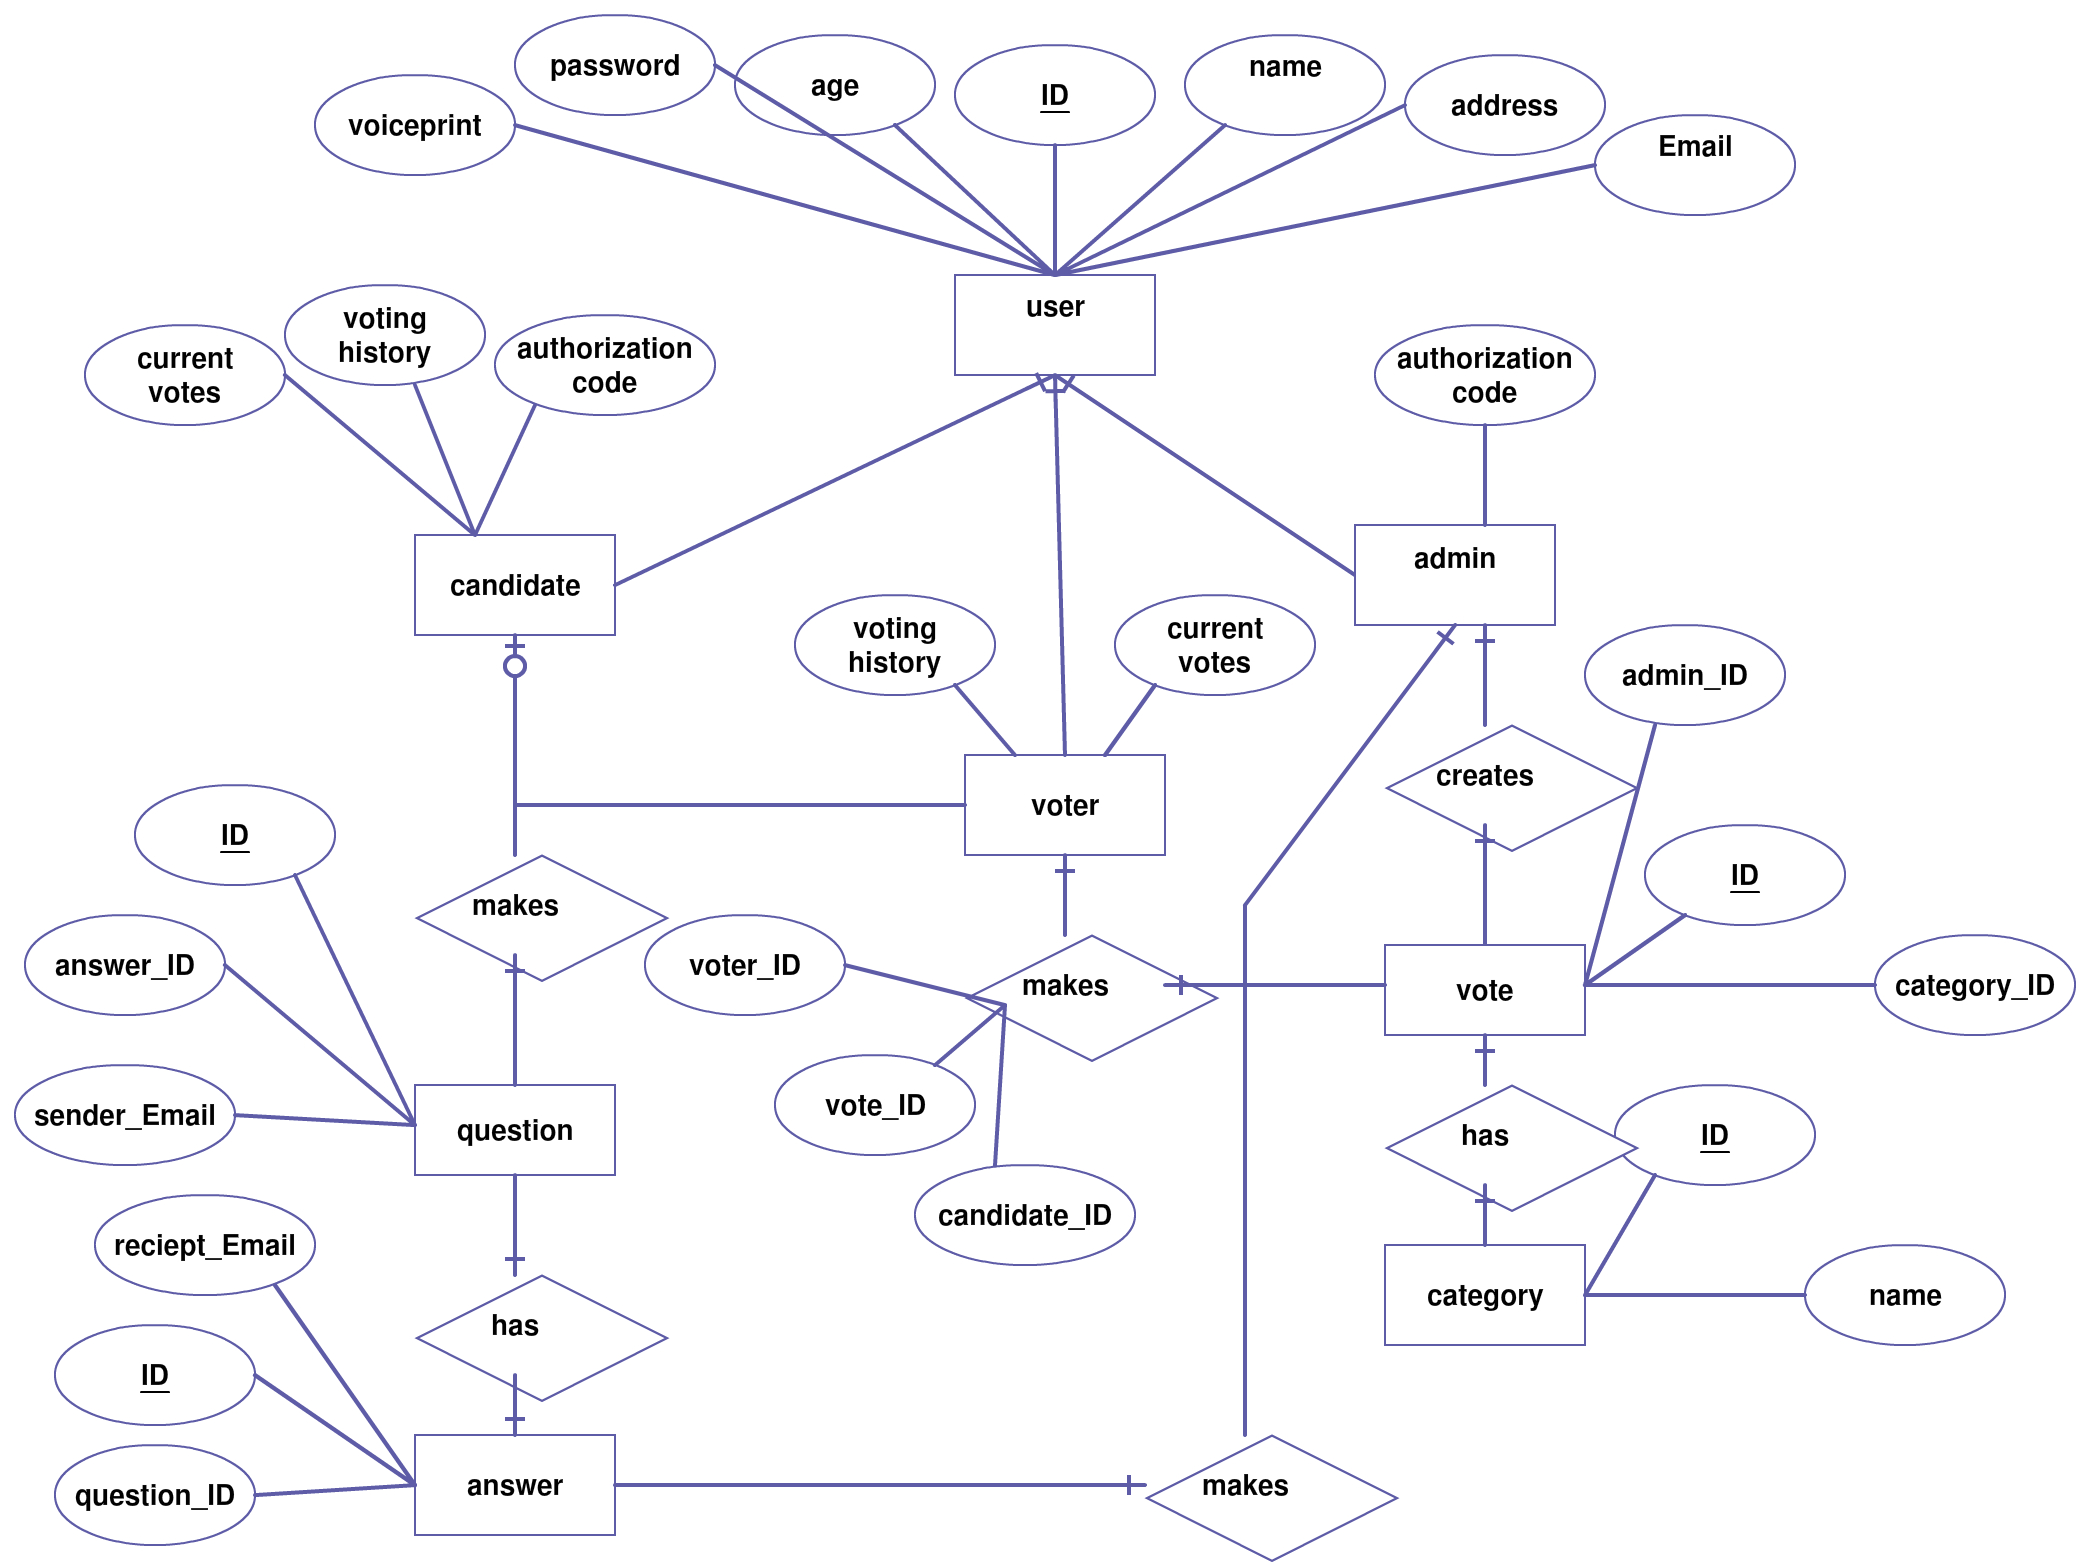 Pin On Entity Relationship Diagram Templates inside Er Diagramm Online